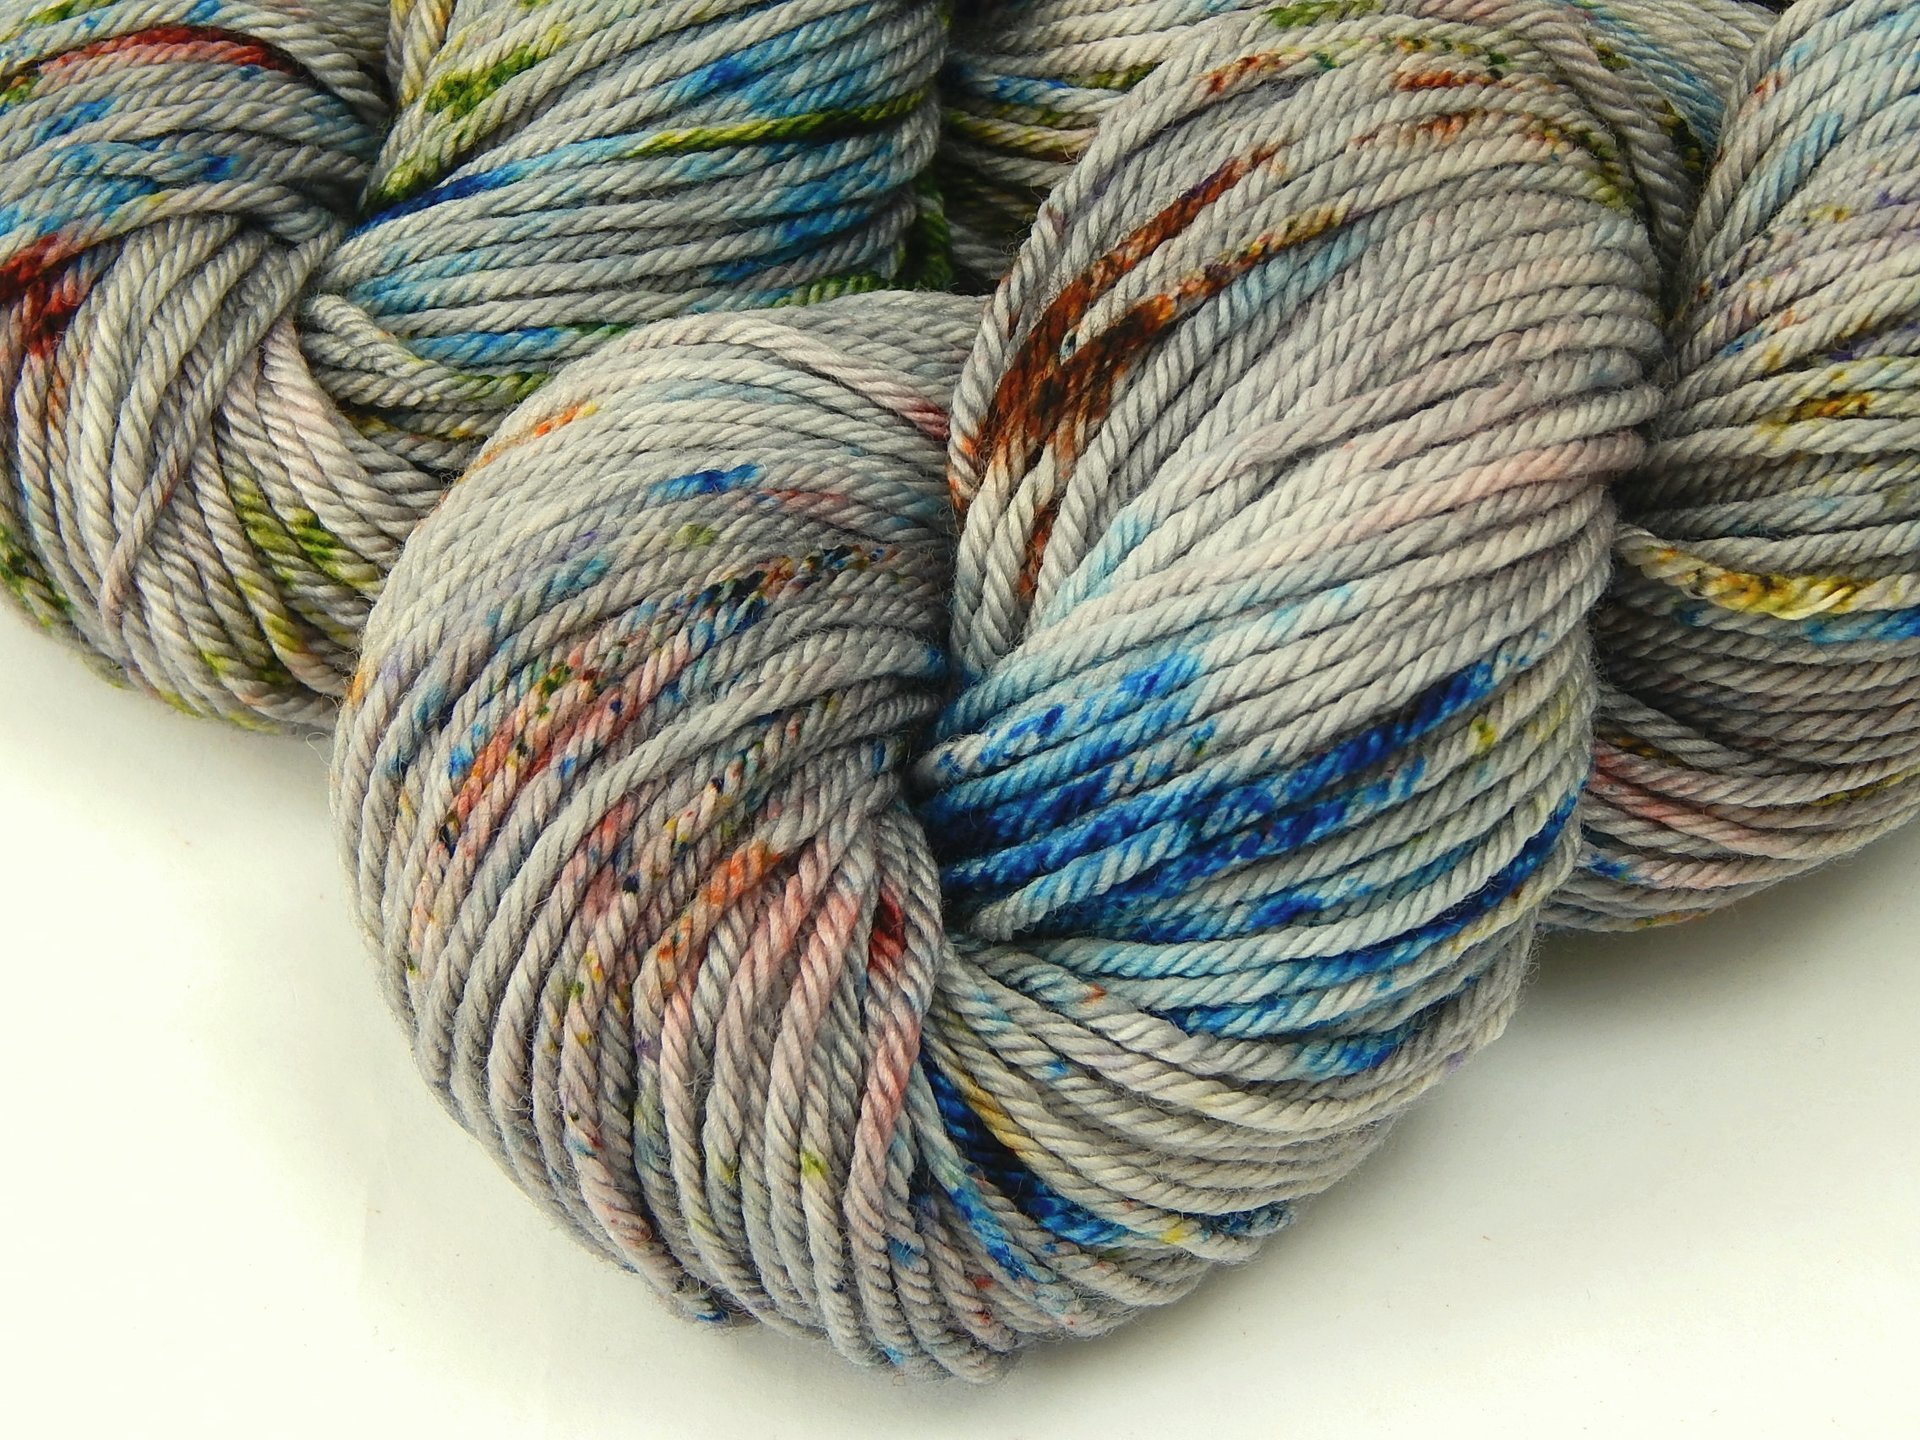 Hand Dyed Yarn, Worsted Weight Superwash Merino Wool - Potluck Graffiti - Indie Dyer Gray Grey Speckled Knitting Yarn, Knit Crochet Supplies